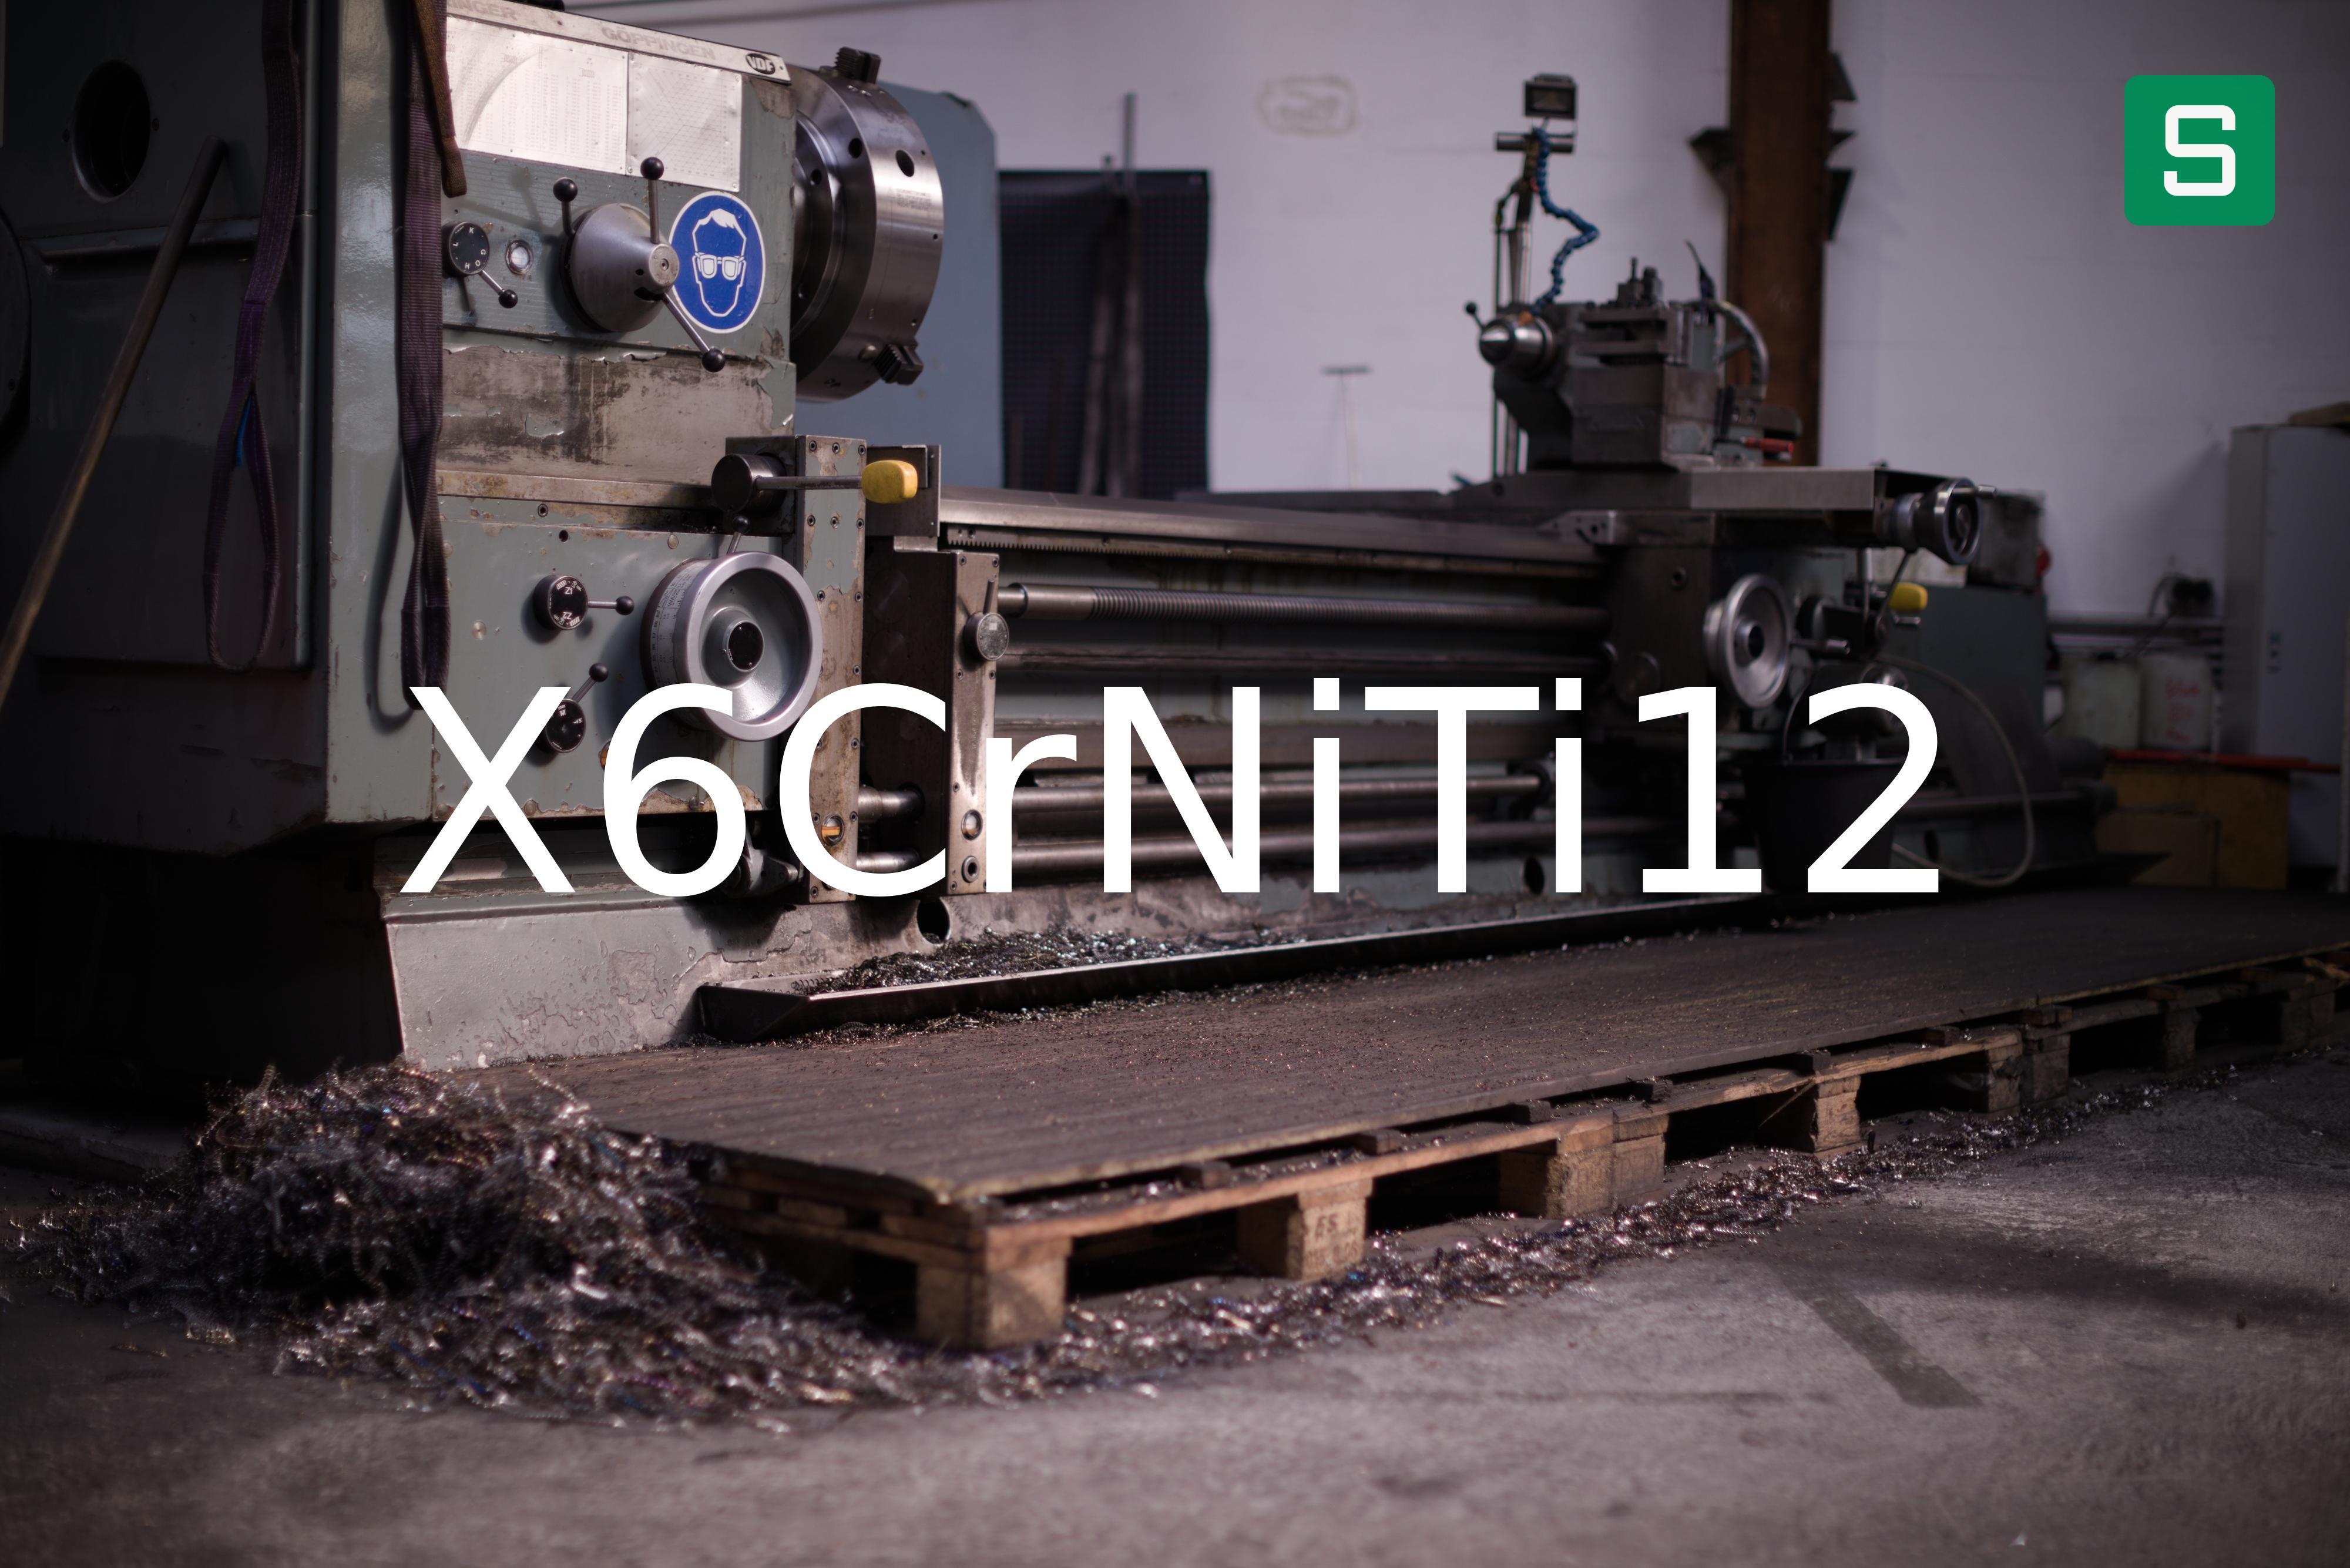 Steel Material: X6CrNiTi12